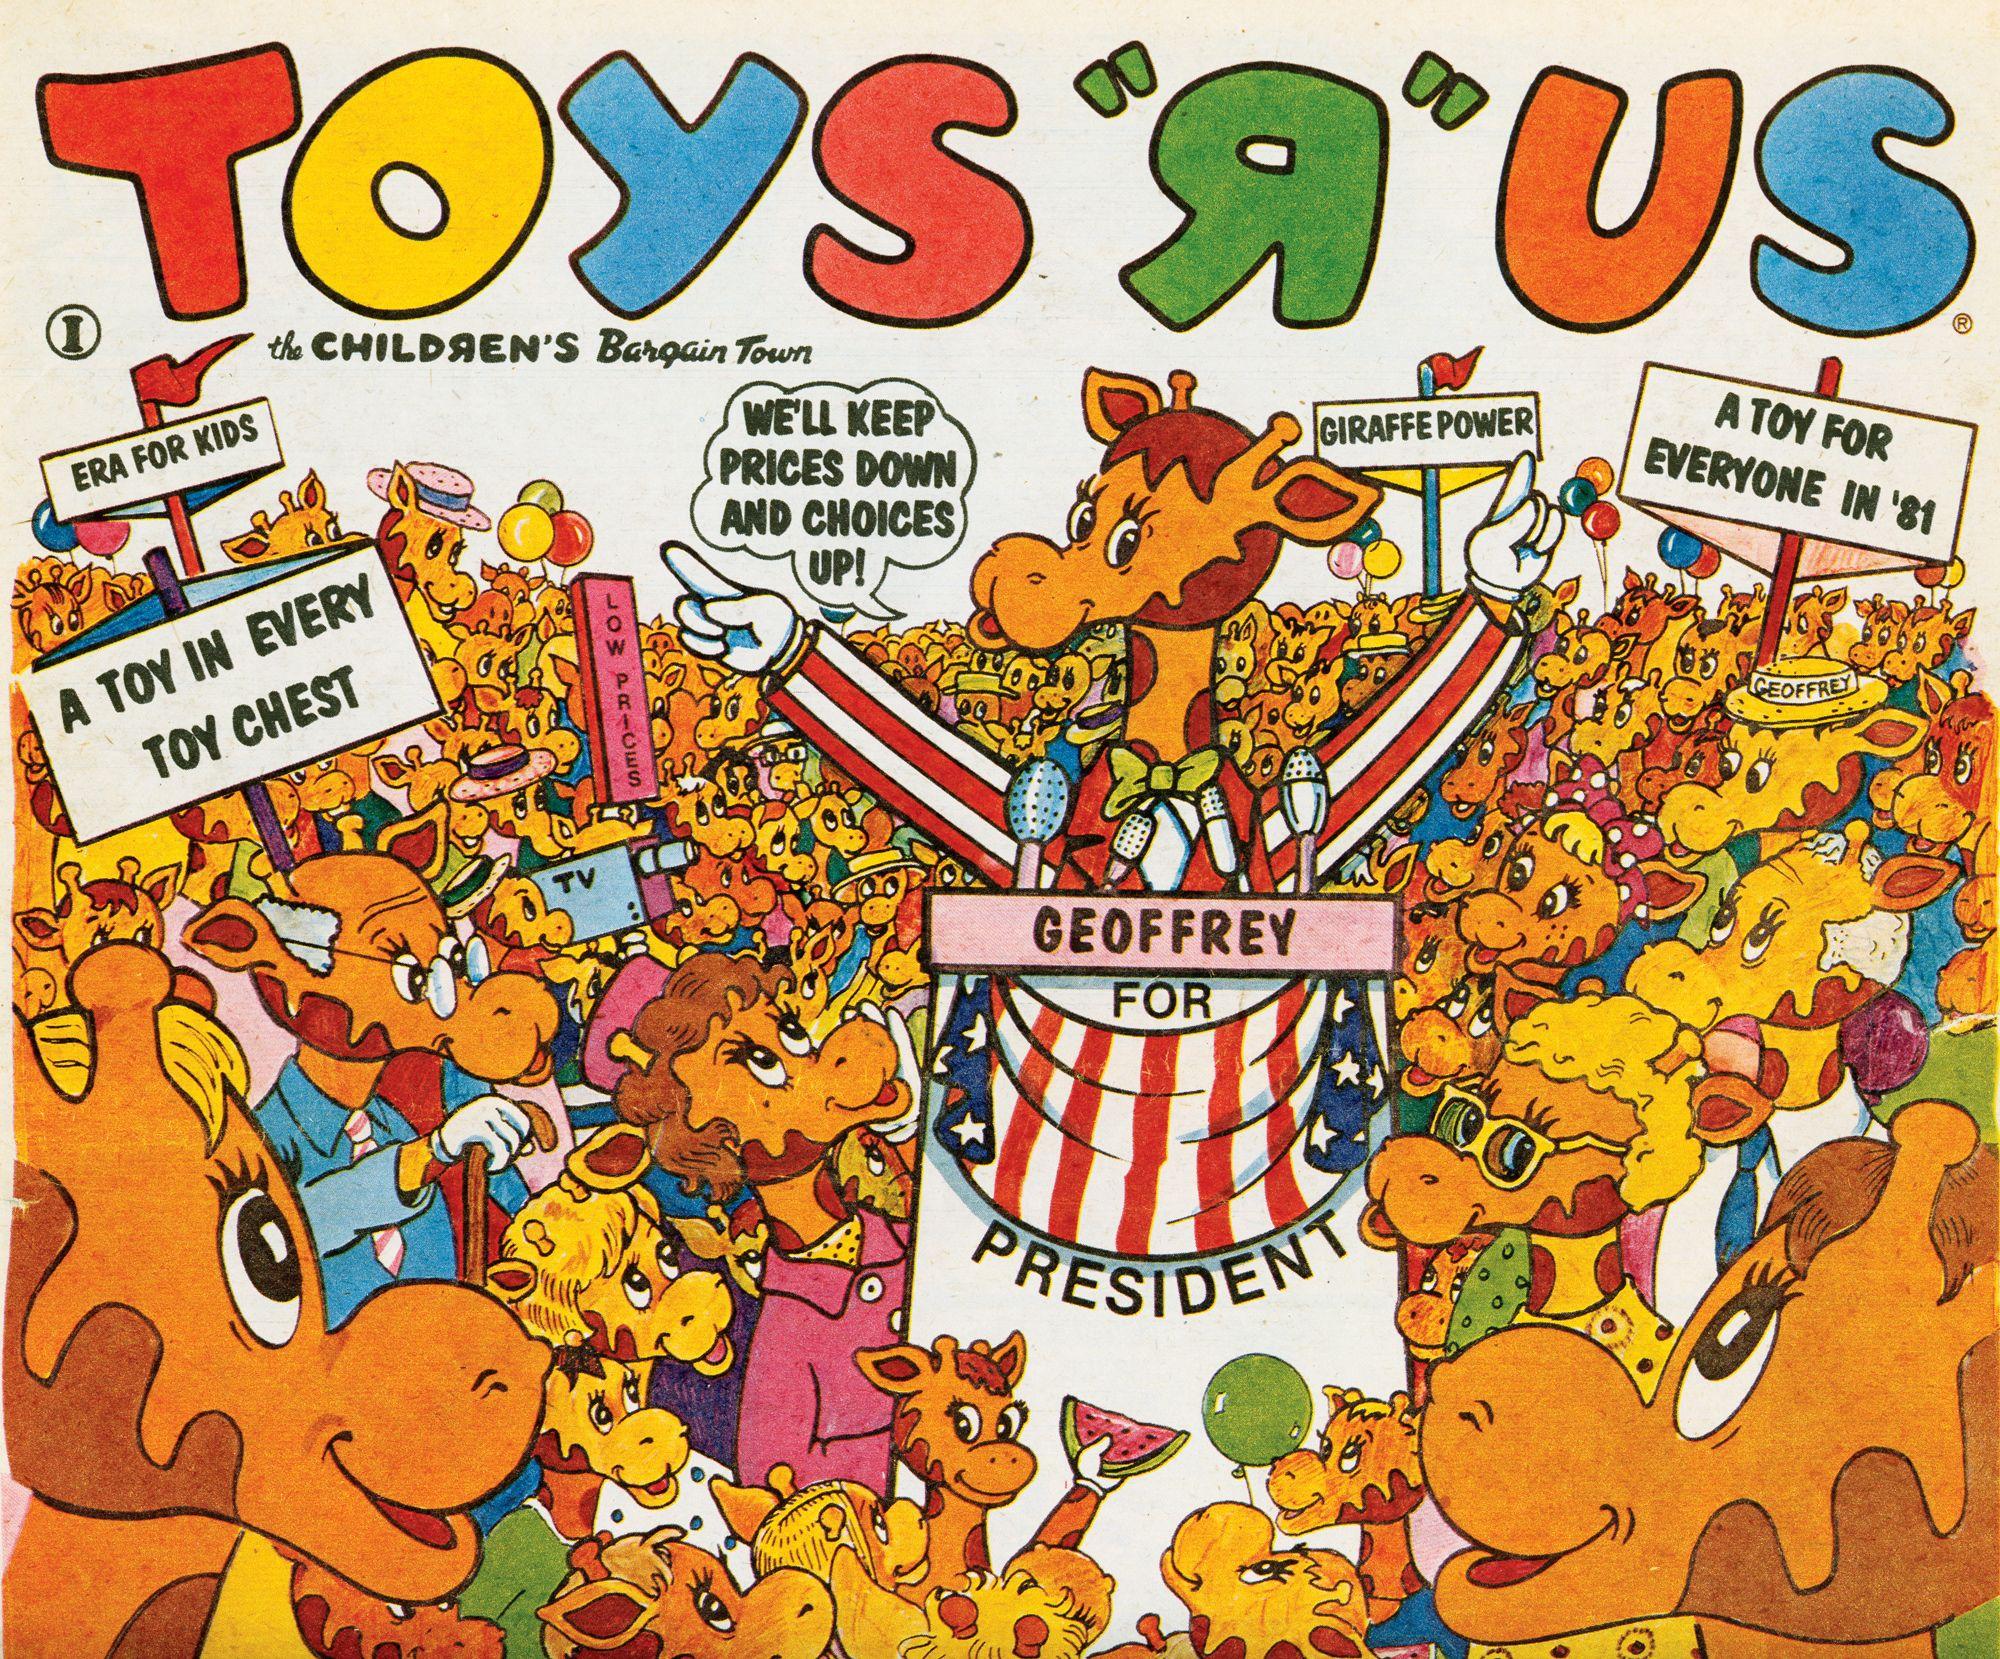 Old Toys R Us Logo - Design Evolution: Geoffrey the Giraffe of Toys“R”Us